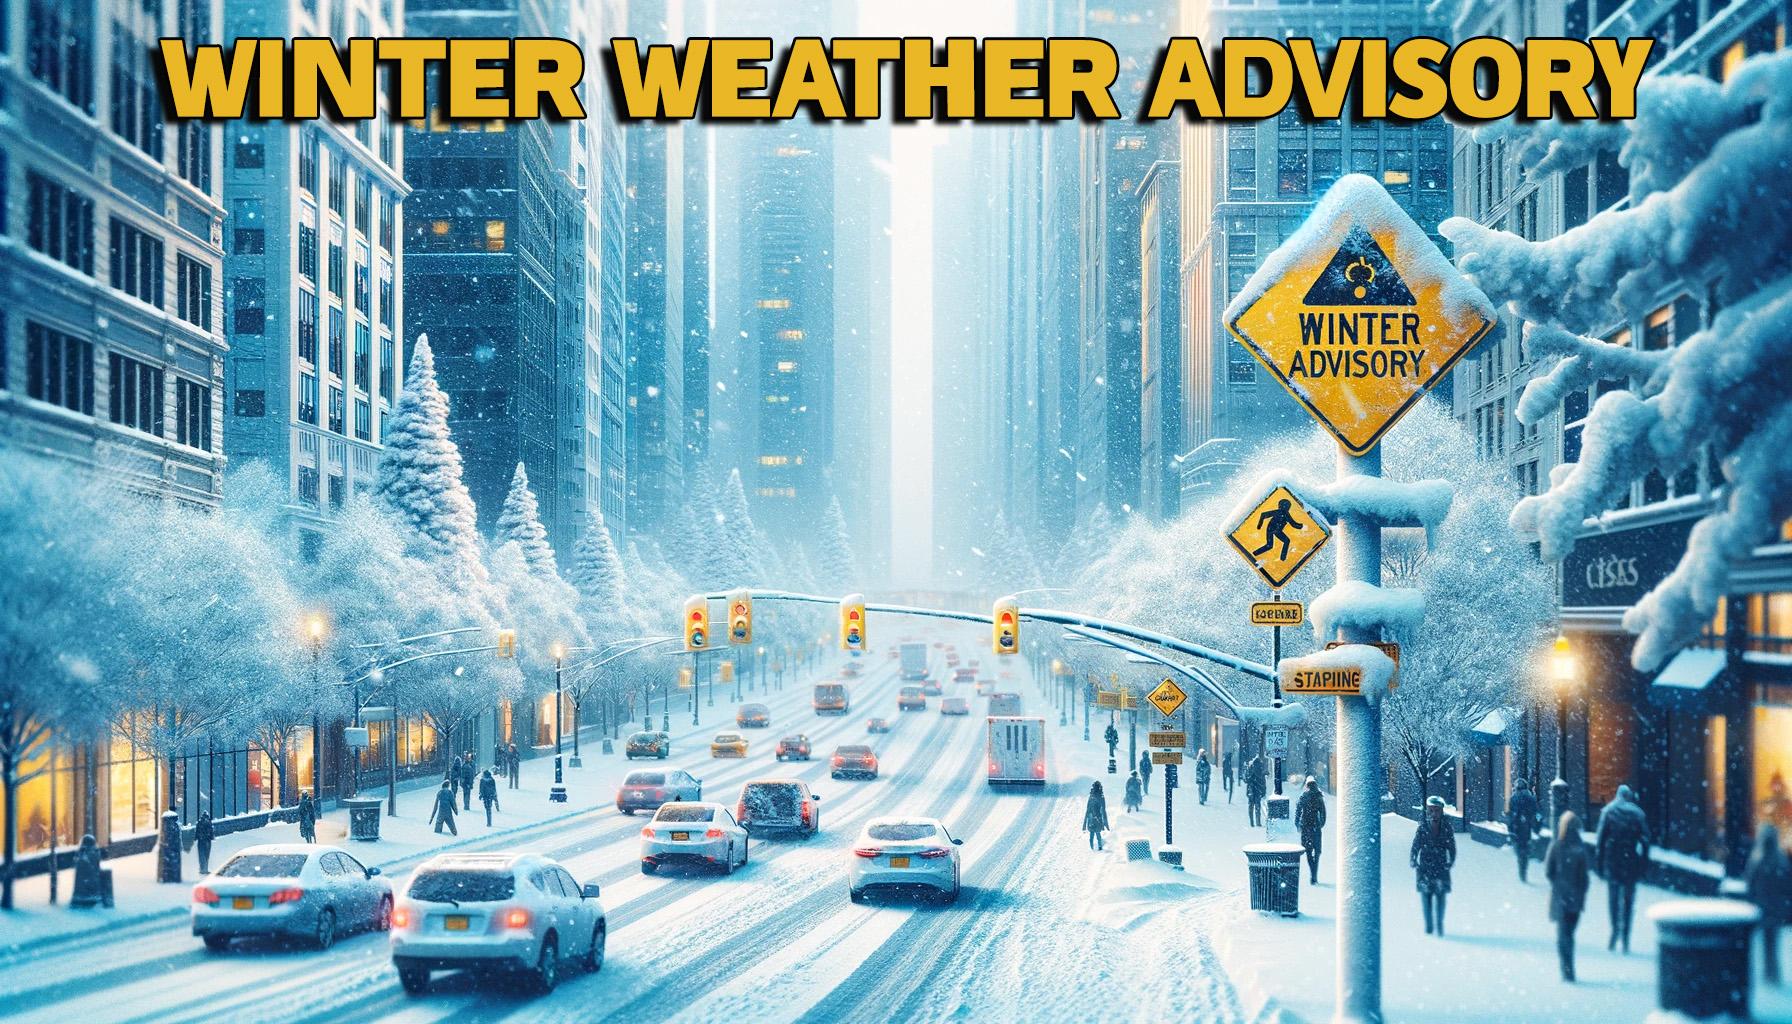 Winter Weather Advisory News Graphic